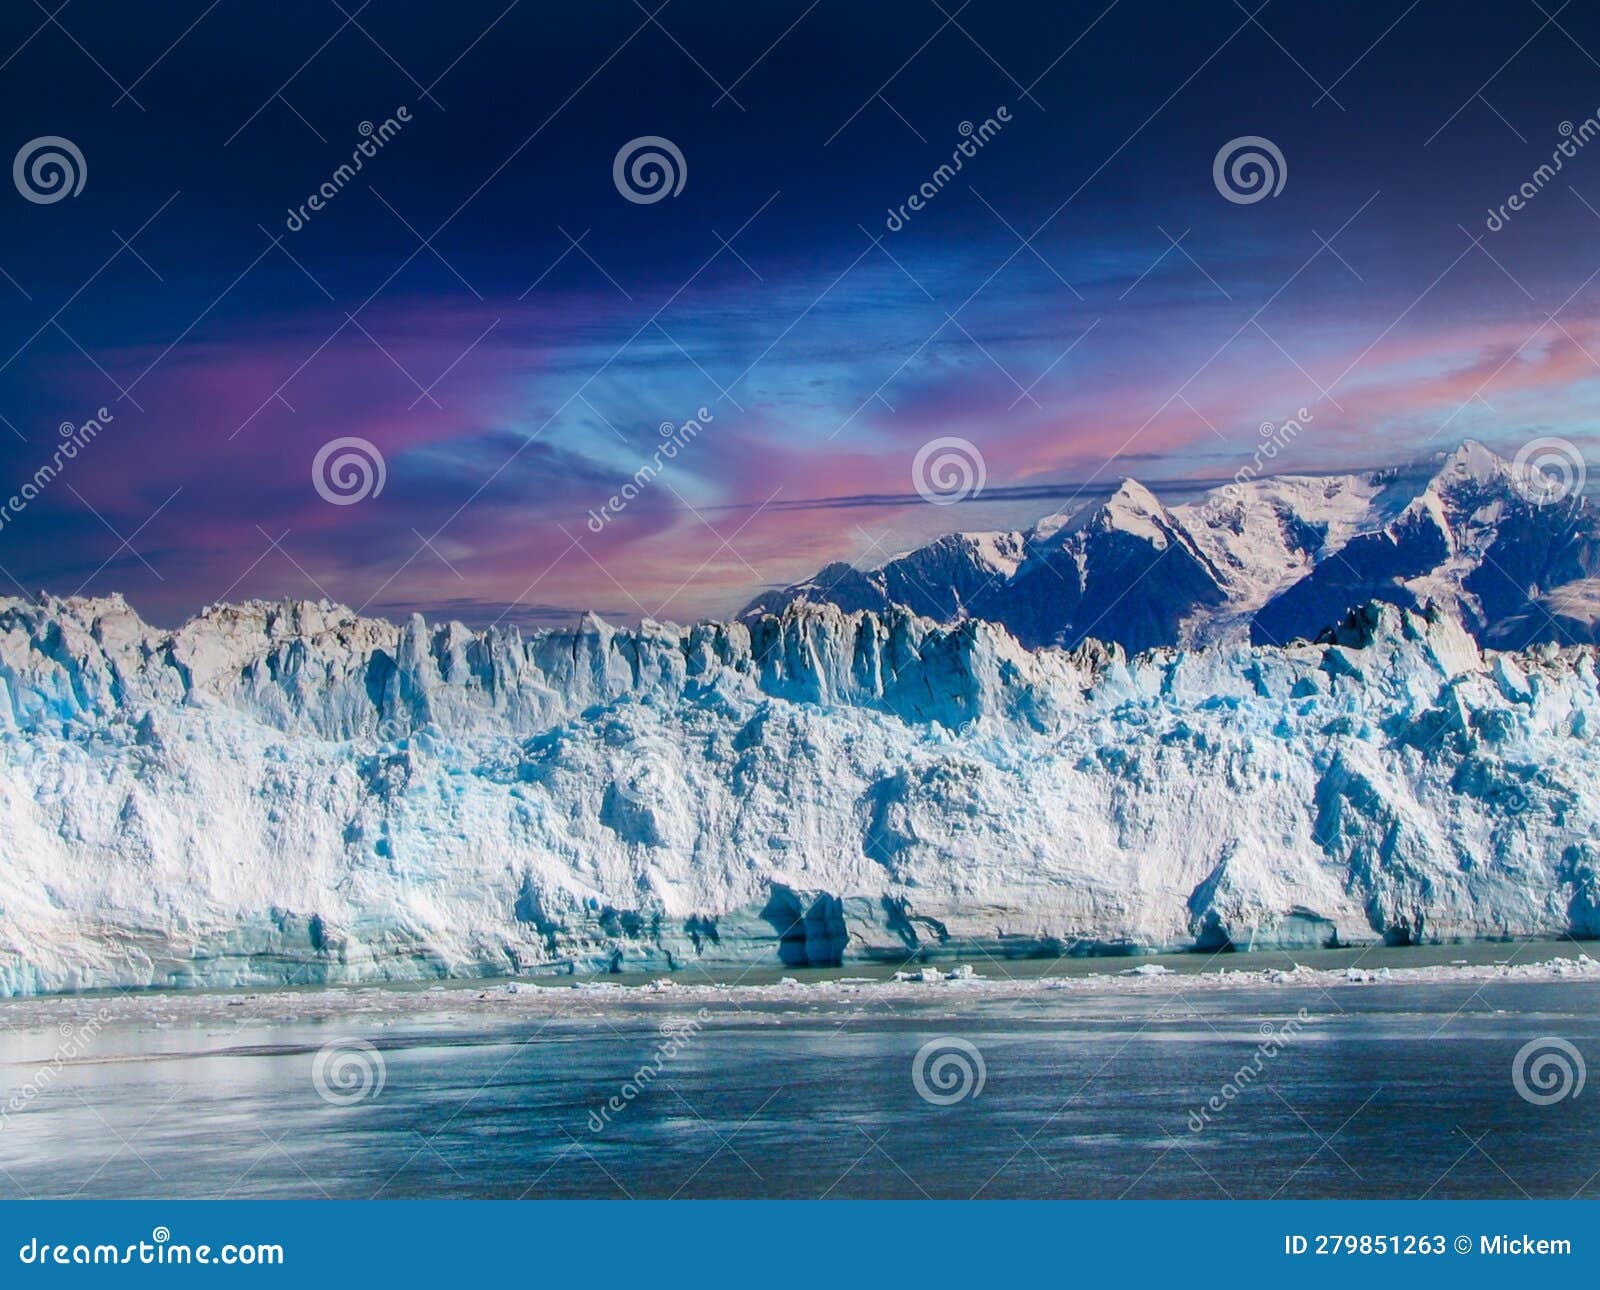 glacier bay ice flow alaska